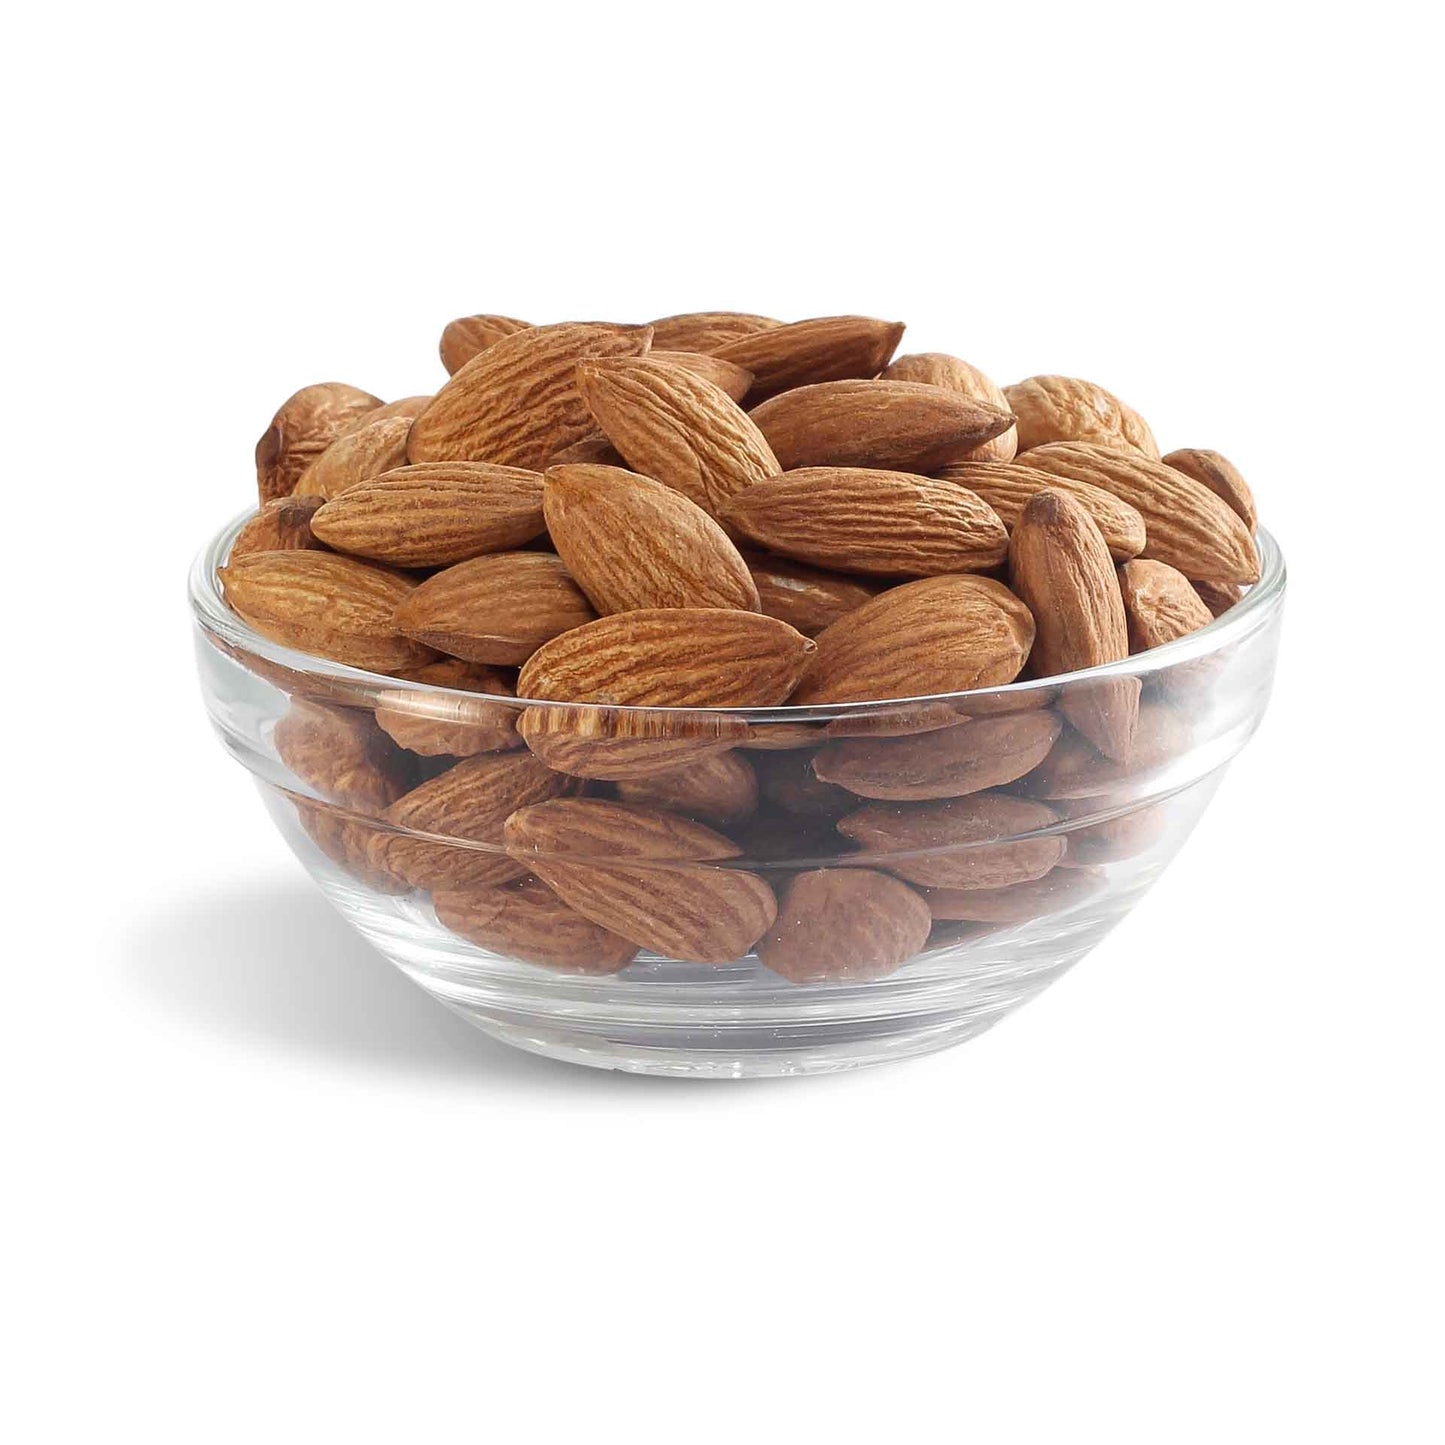 Organic Almonds | 500gms - Conscious Food Pvt Ltd